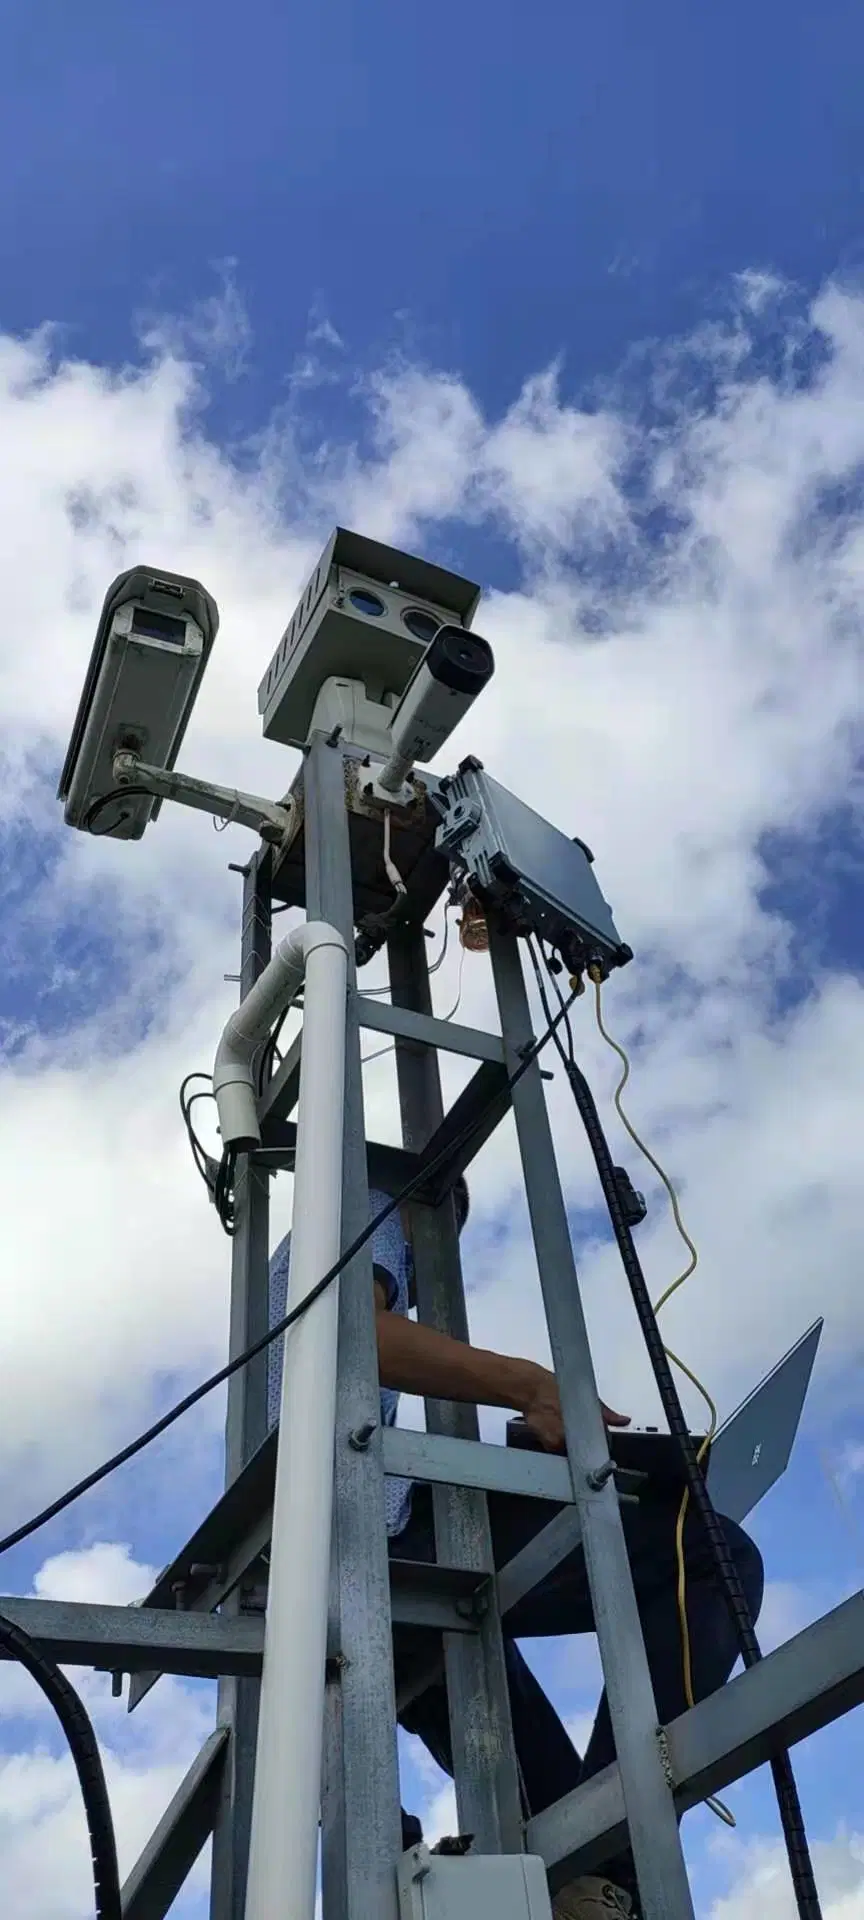 Coastal Surveillance Radar to Help Protect Coastlines and The Maritime Domain